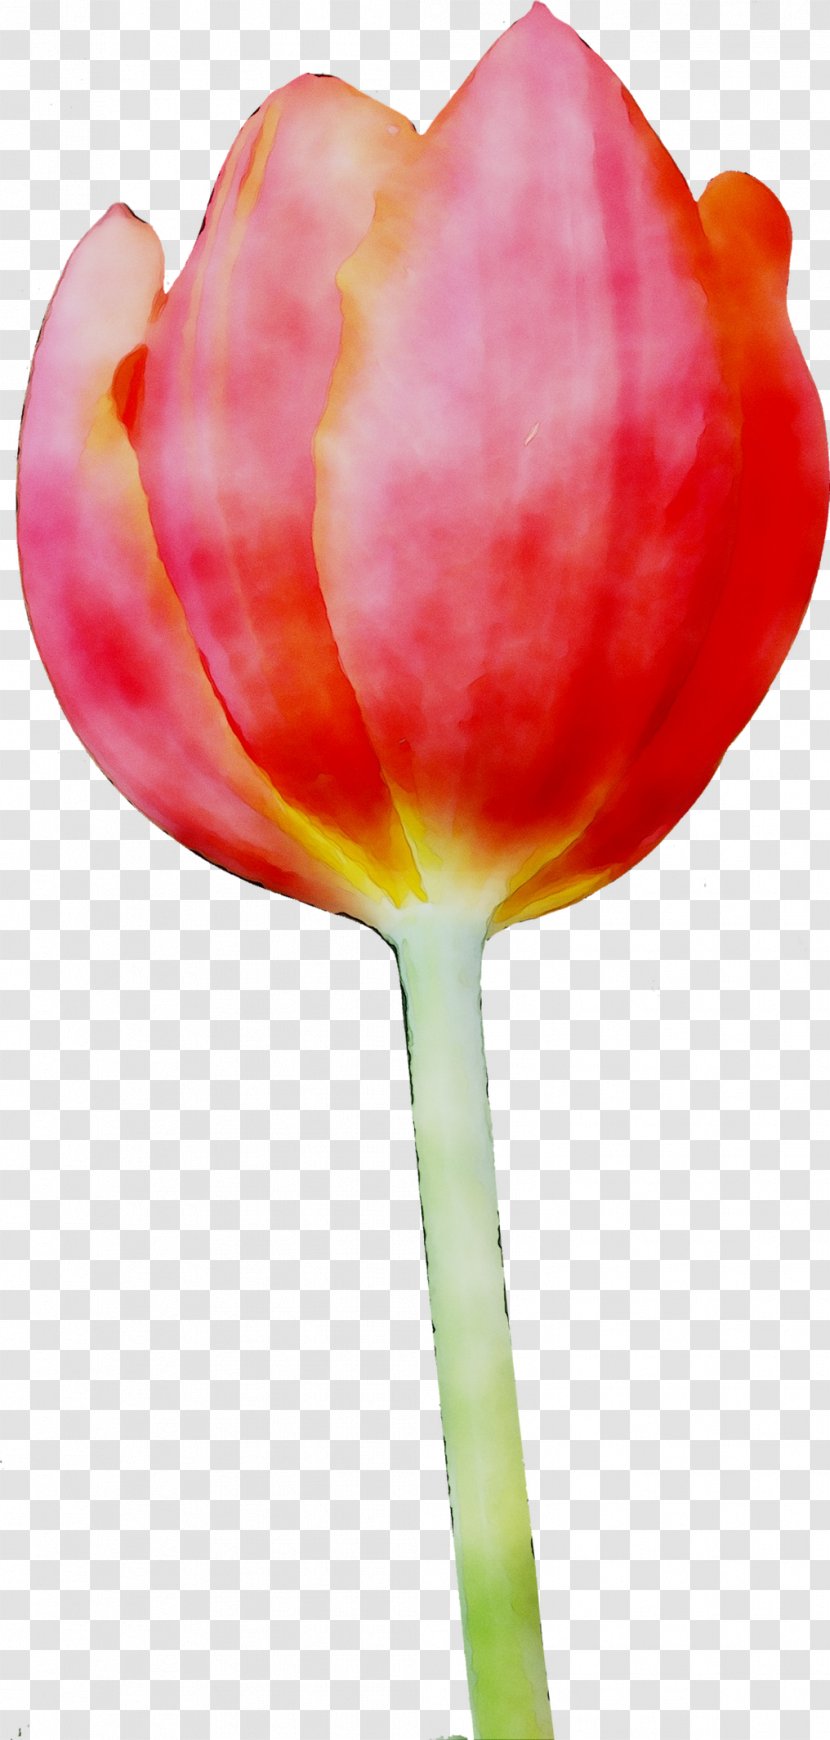 Tulip Clip Art Image Transparency - Photography - Watercolor Paint Transparent PNG